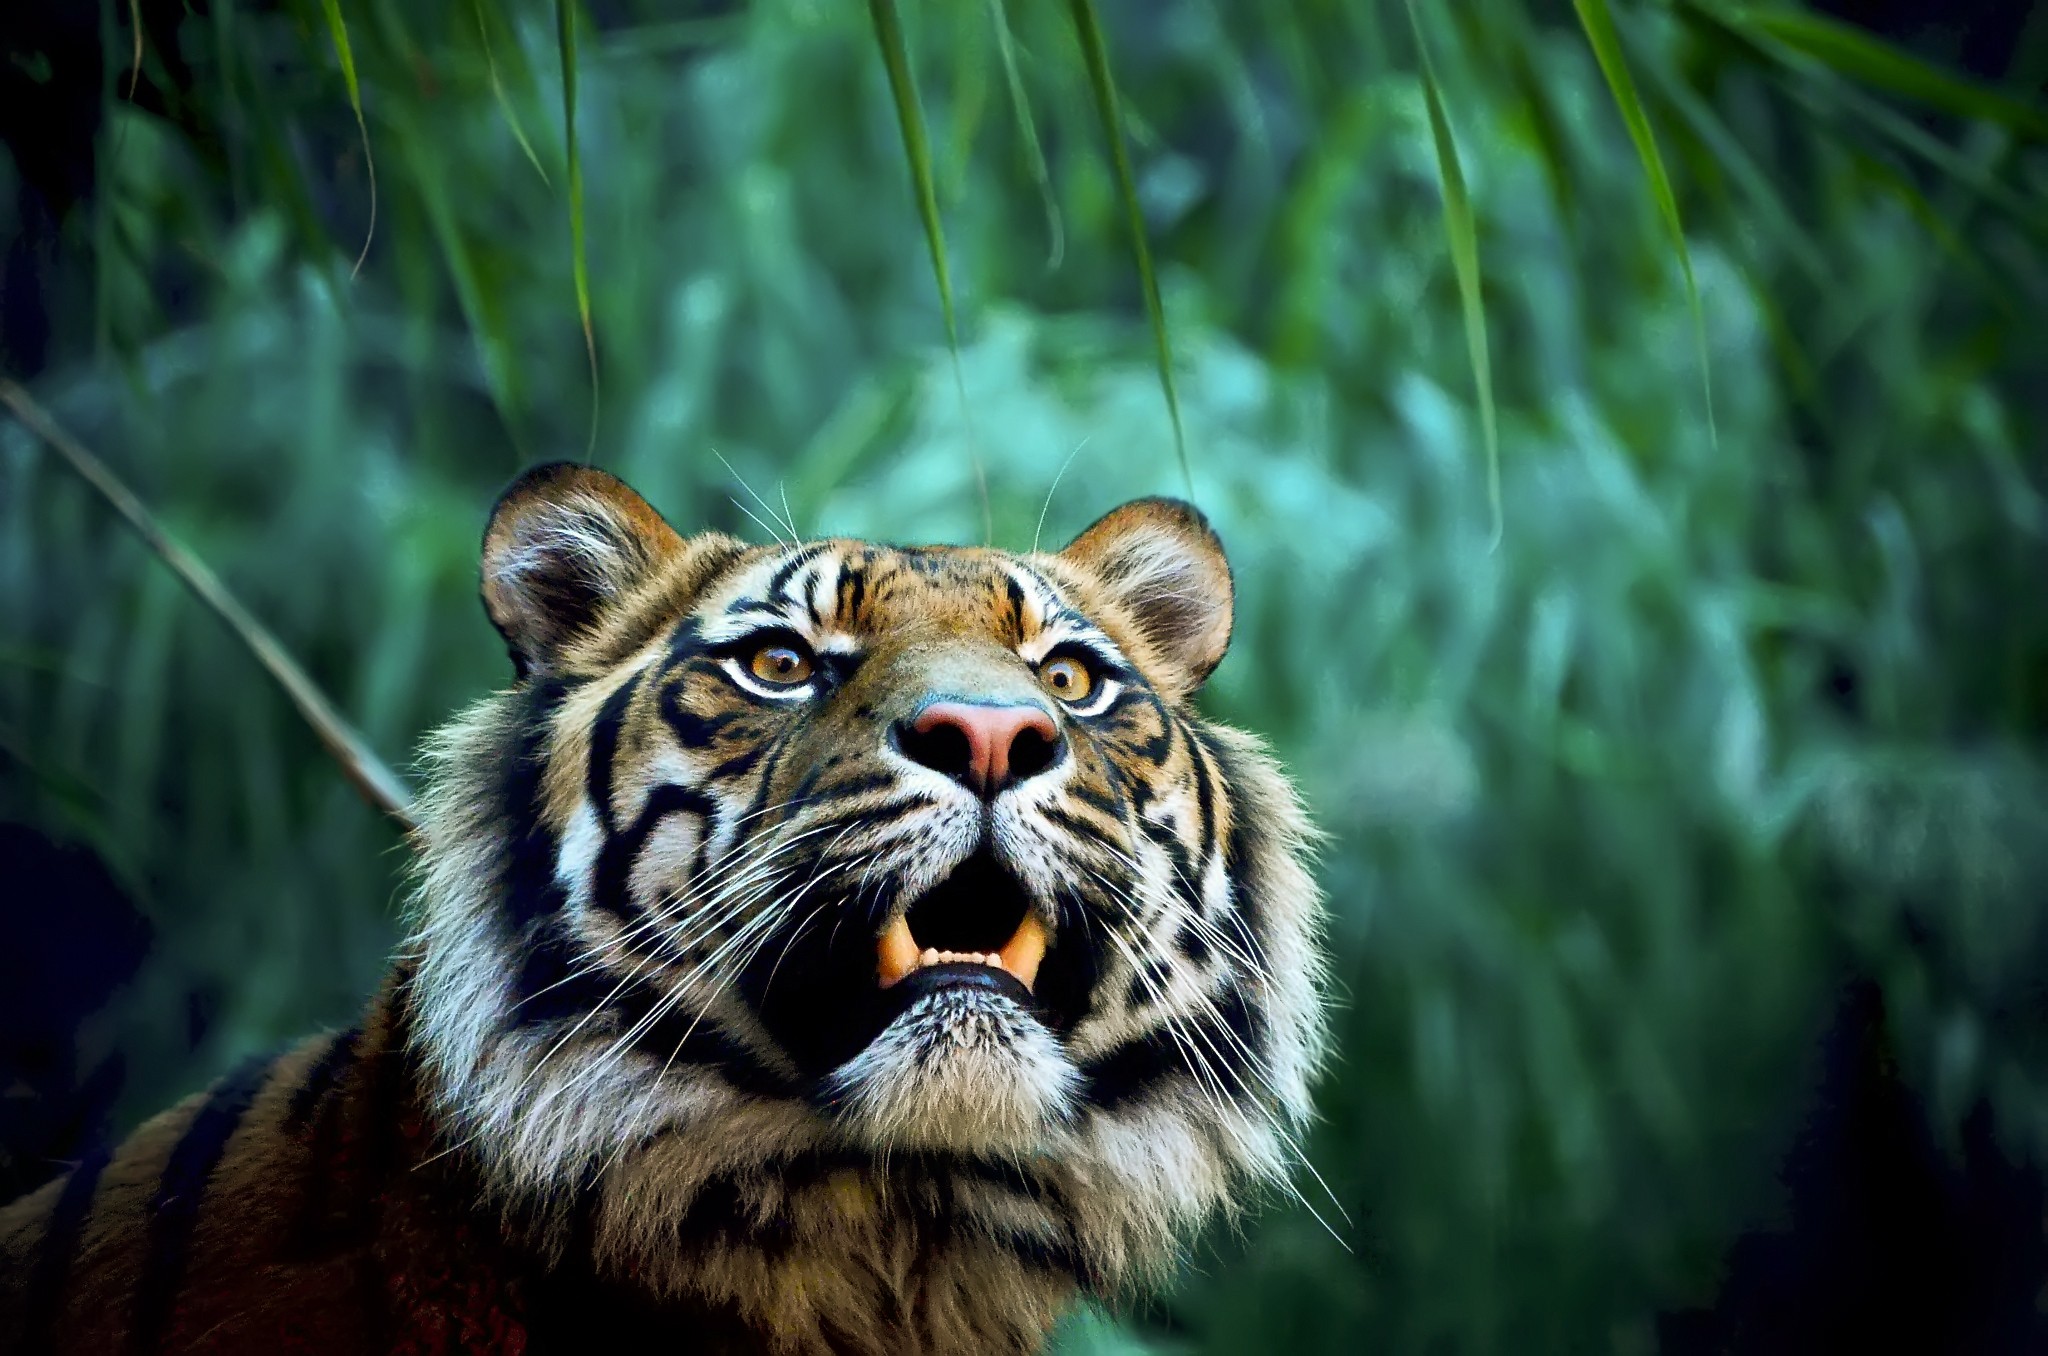 General 2048x1356 animals nature tiger mammals big cats fangs yellow eyes